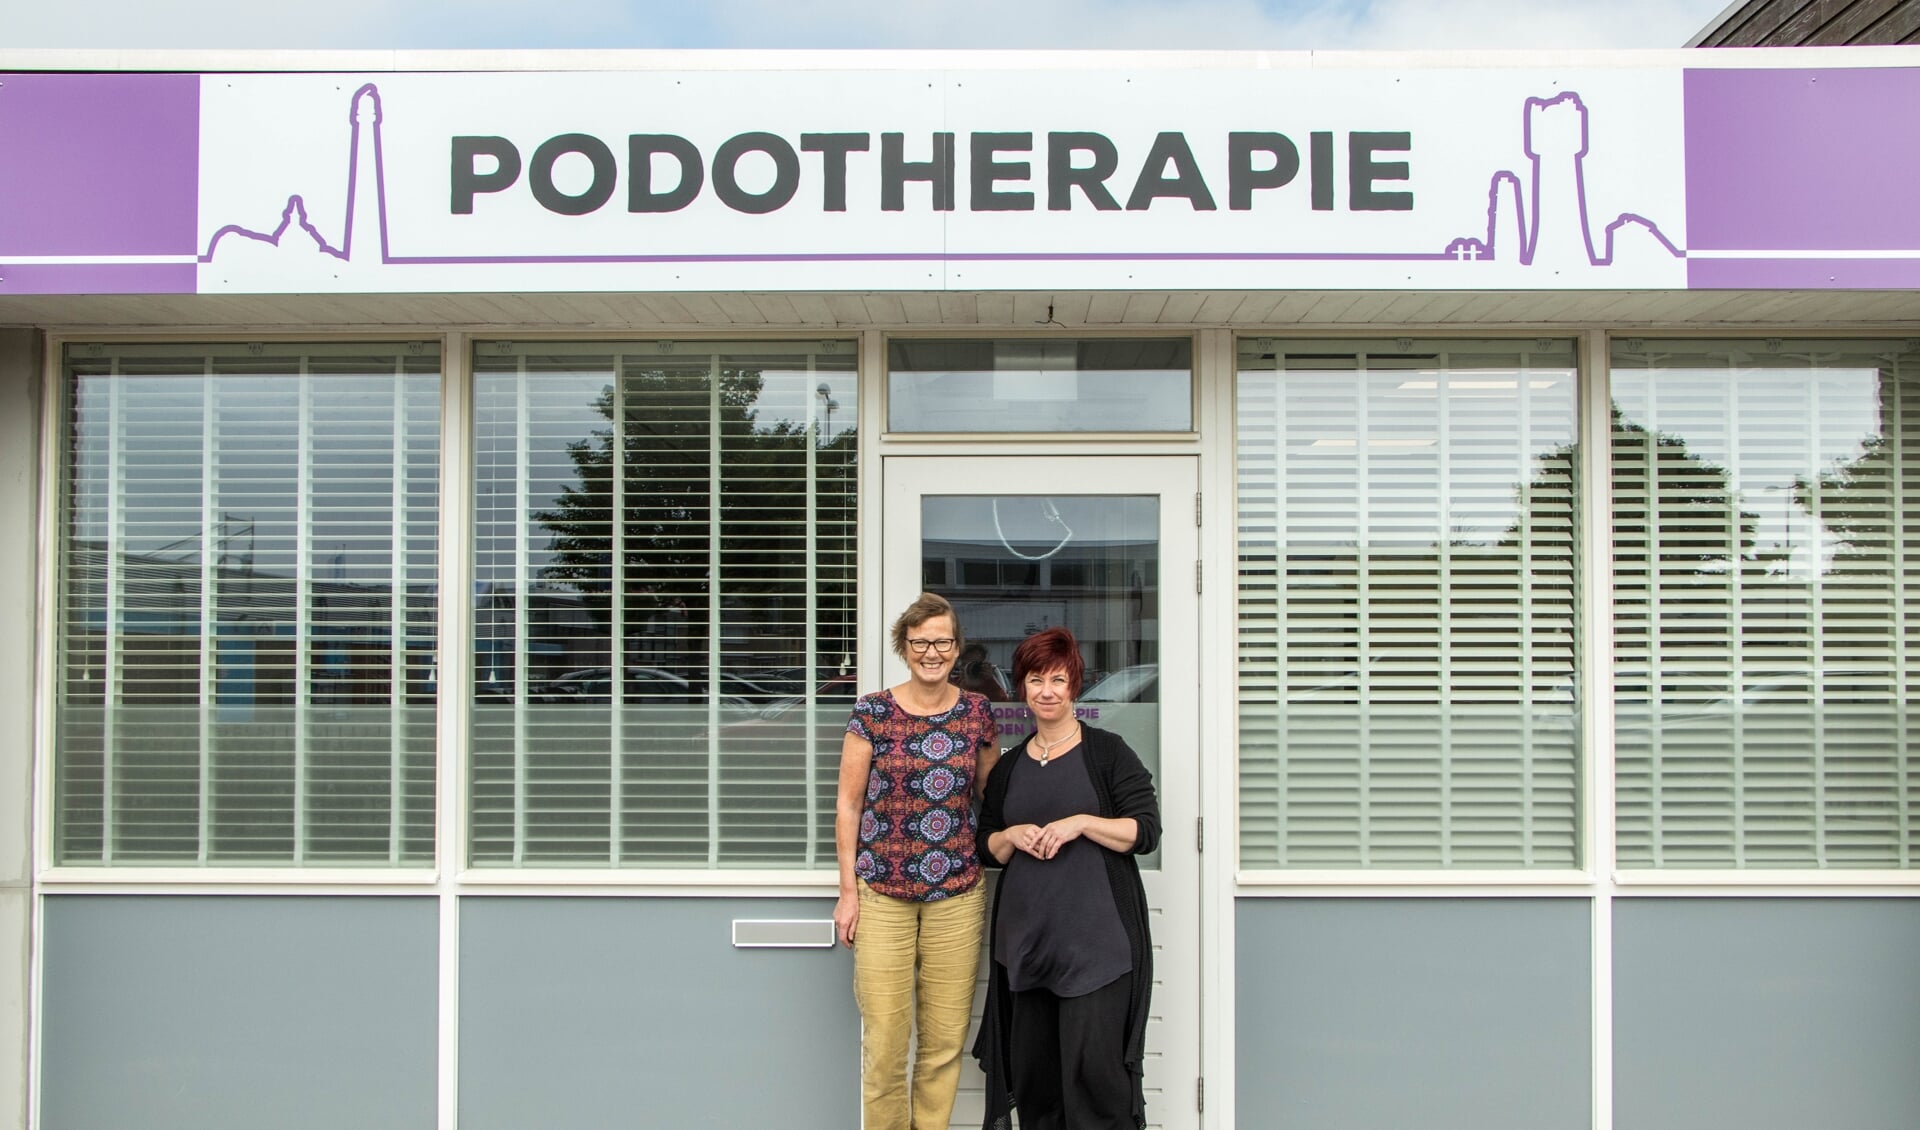 Podotherapie Abrahams en podotherapeut Schrama samen Podotherapie Den Helder.